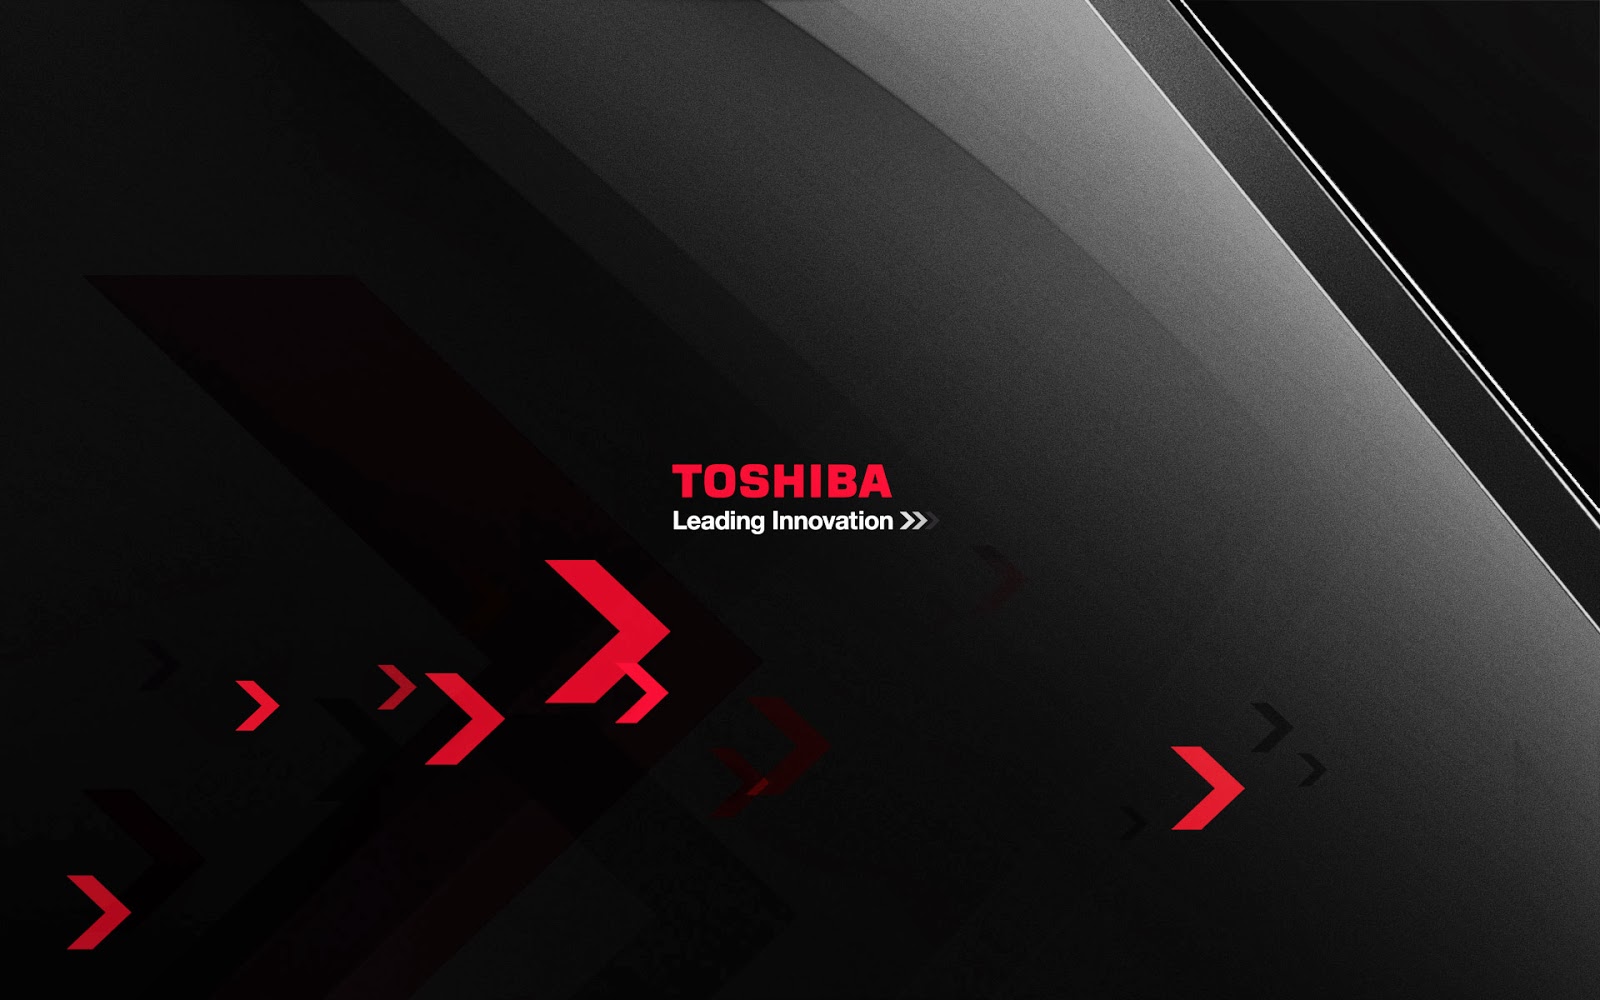 Toshiba HD Wallpapers toshiba widescreen technology 1600x1000